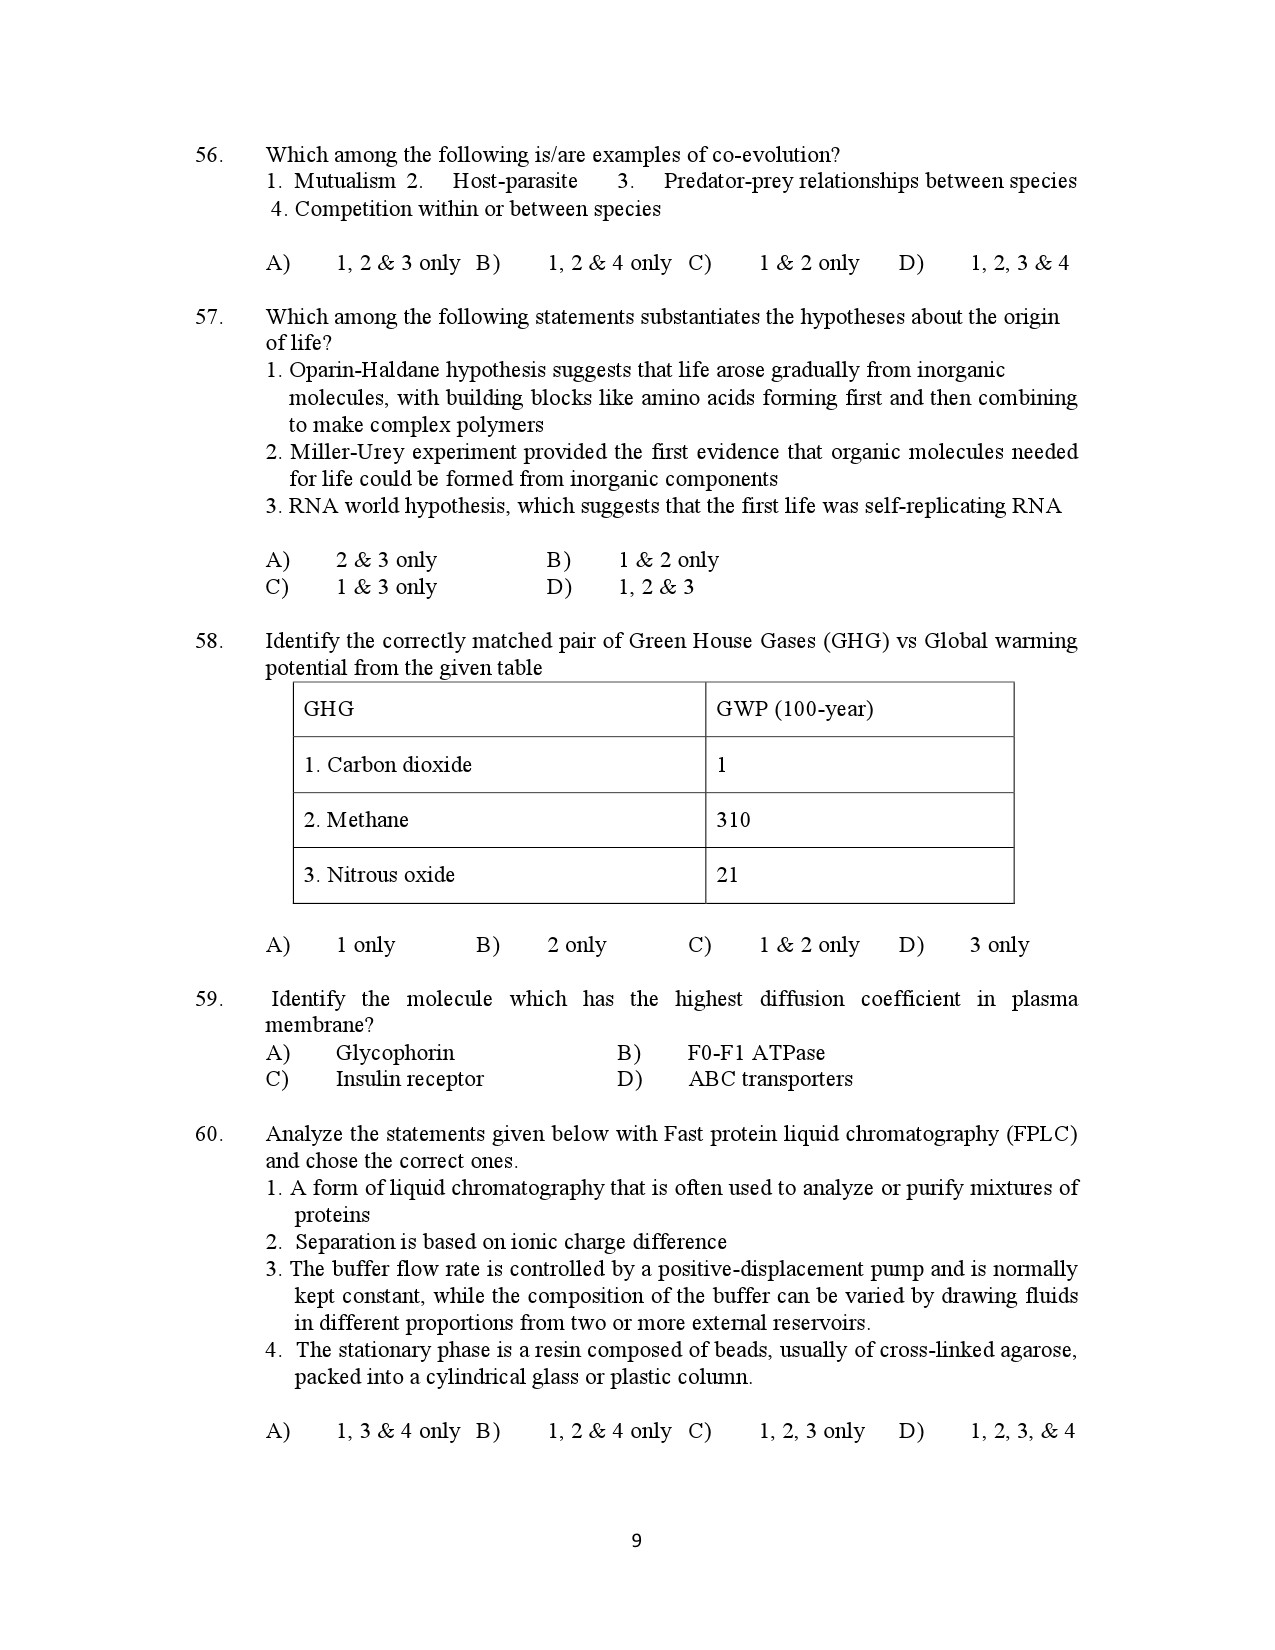 Kerala SET Botany Exam Question Paper July 2021 9